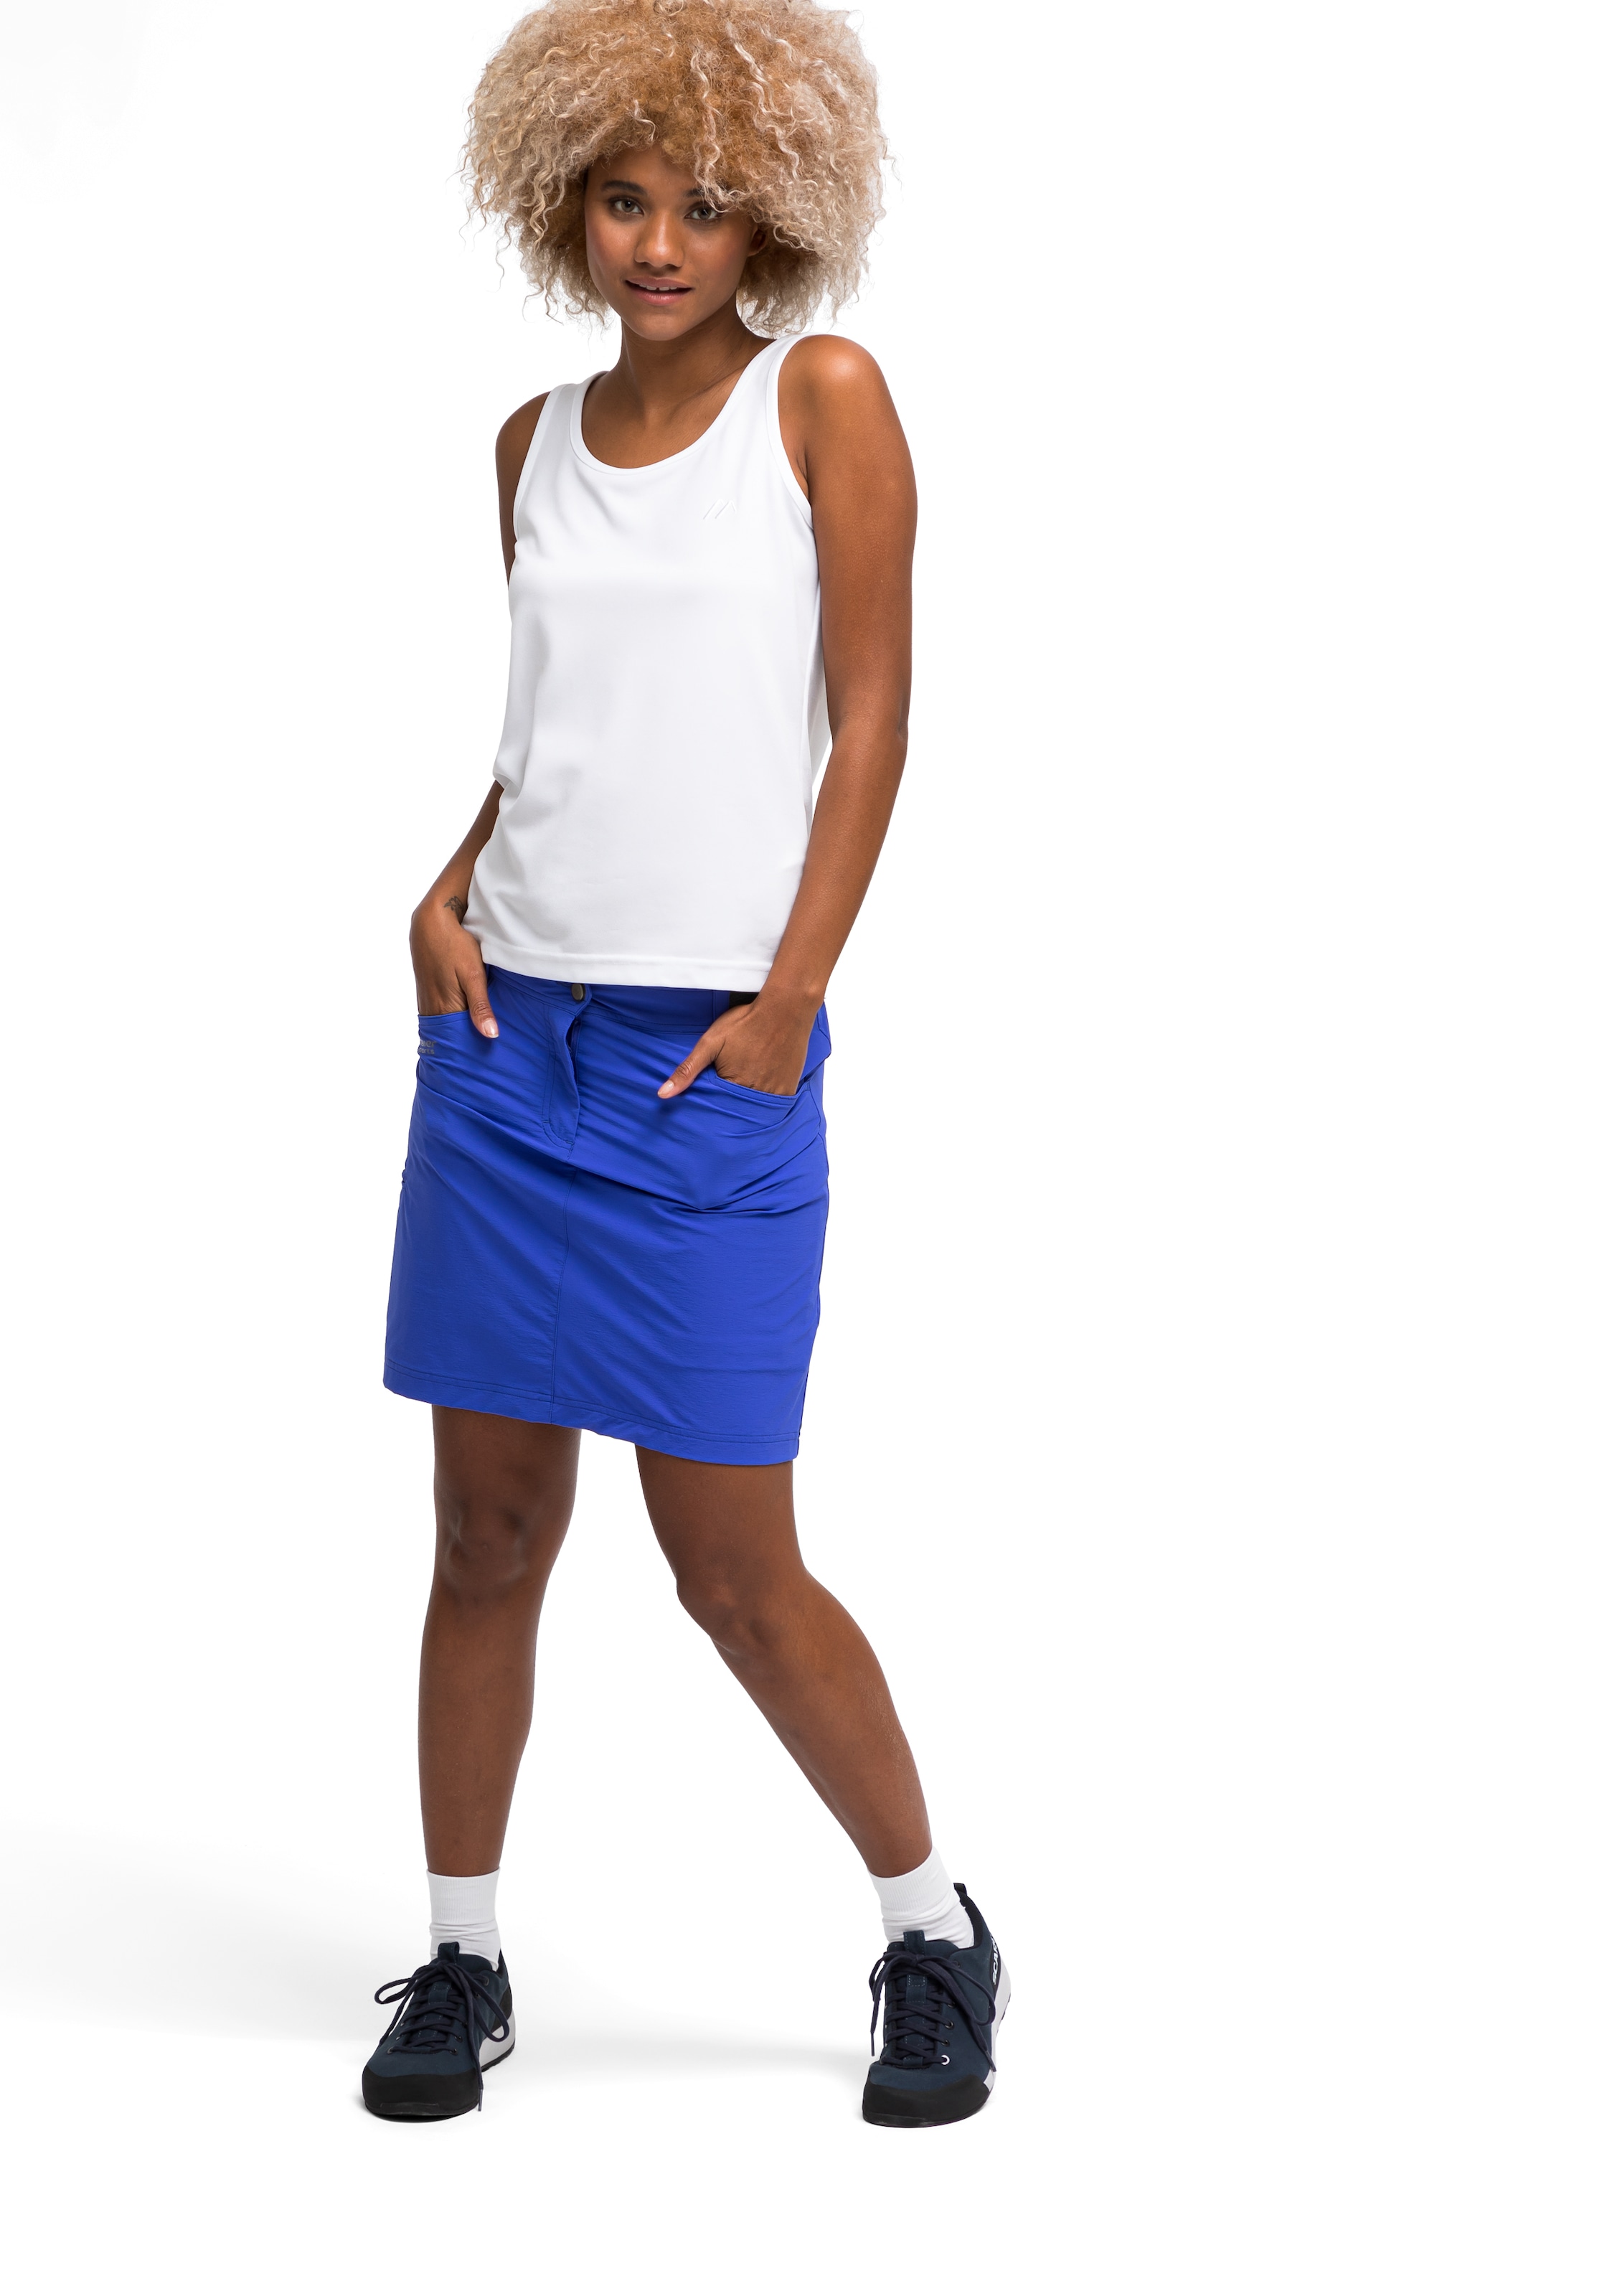 Maier Sports Funktionsshirt »Petra«, Damen Tank-Top für Sport und Outdoor- Aktivitäten, ärmelloses Shirt kaufen